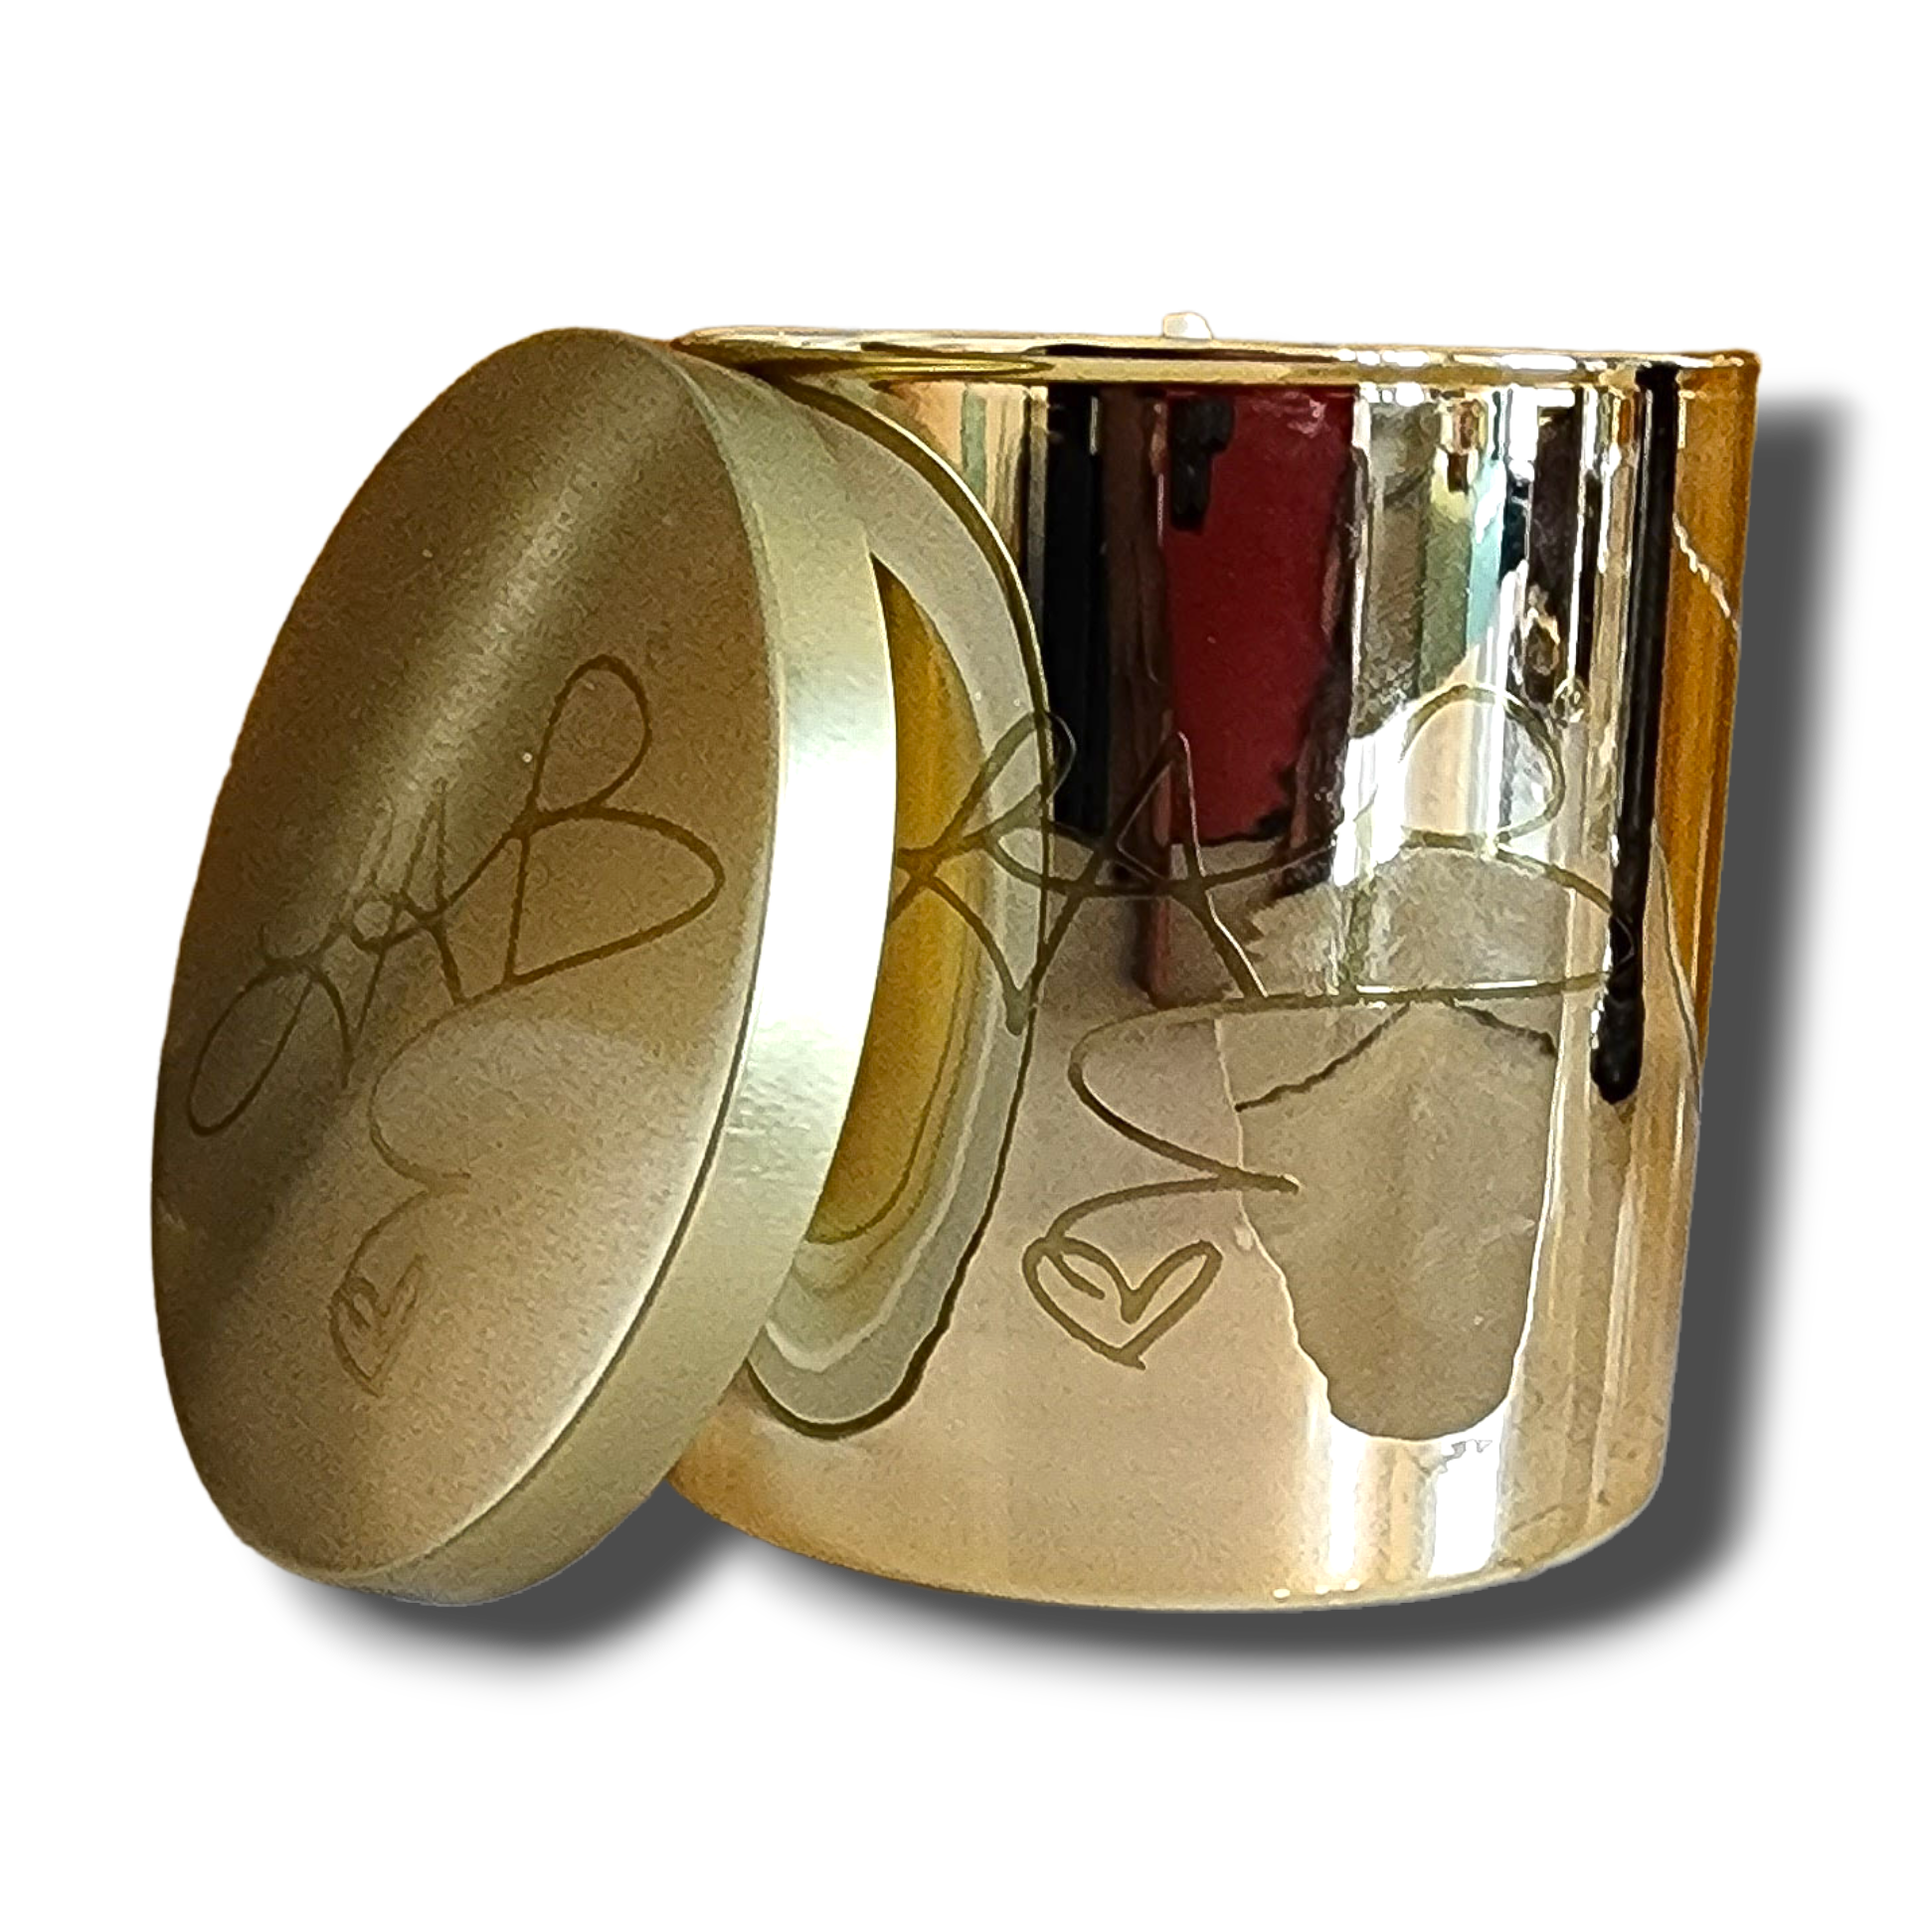  LAB Floride* Luxury Candle  | Elegance in Gold Jar | LAB Shaman by LABShaman sold by LABShaman